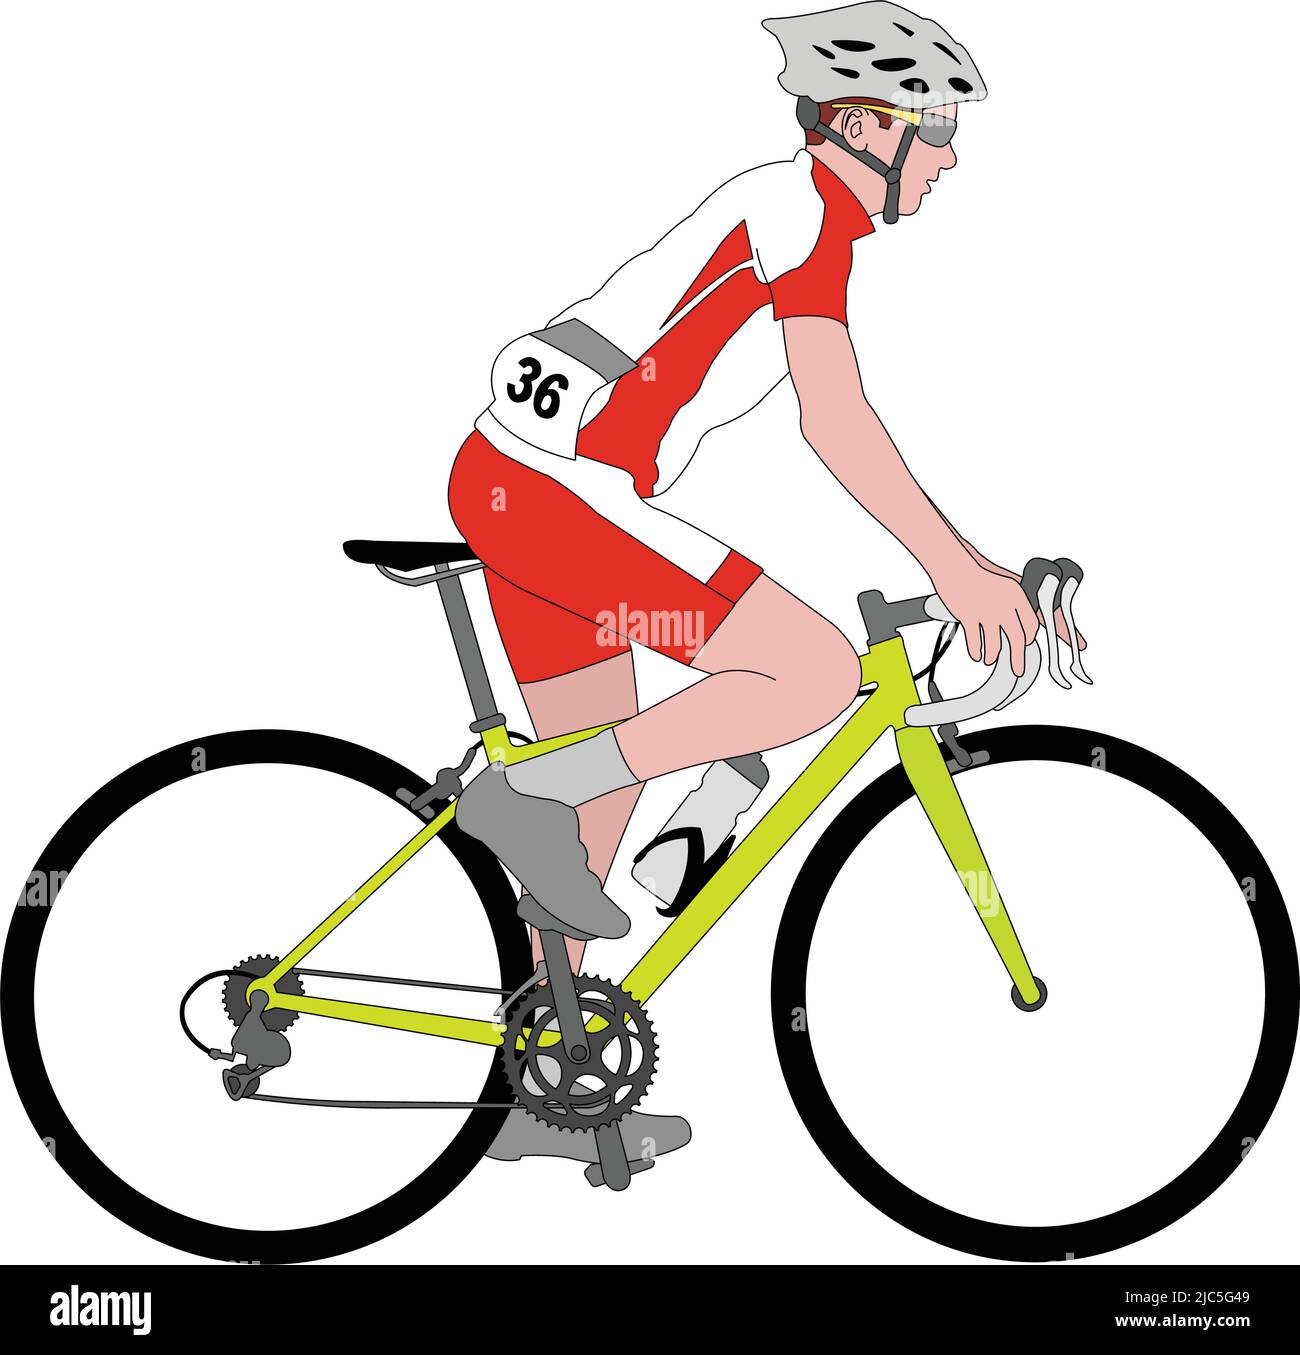 Rennradfahrer detaillierte Farbdarstellung - Vektor Stock Vektor